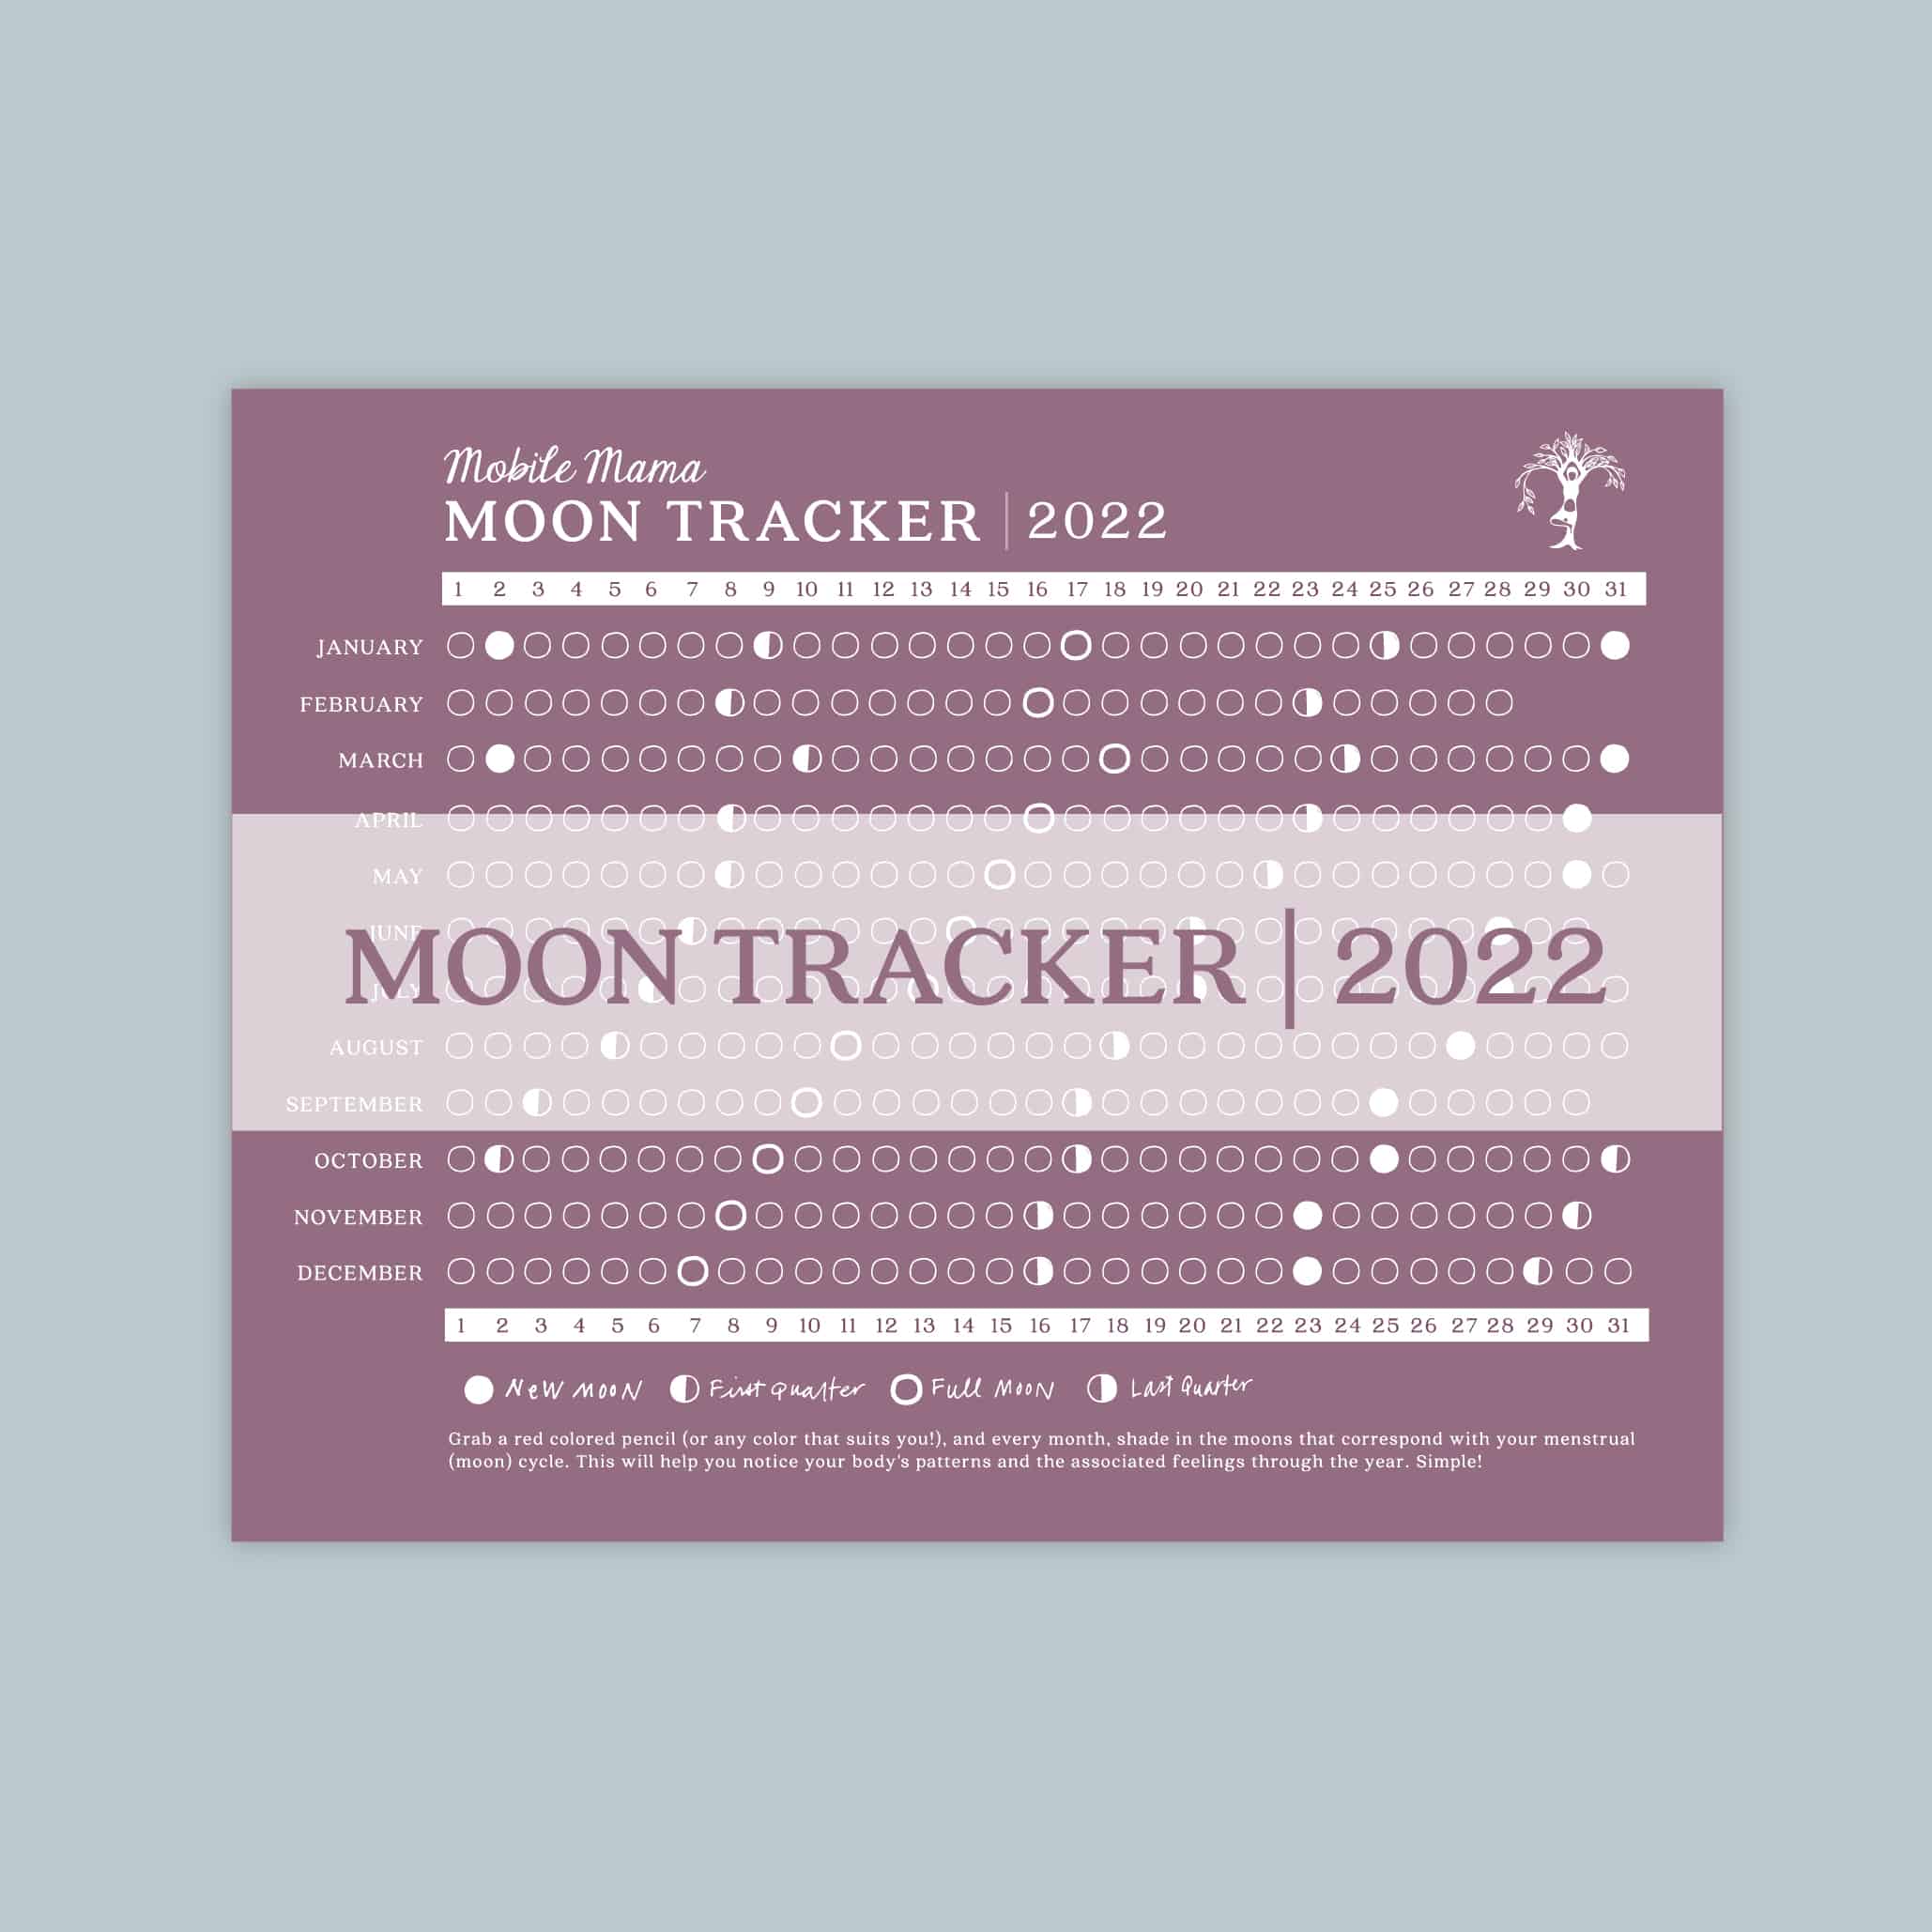 Moon-Tracker-Image_Blue-2058x2058